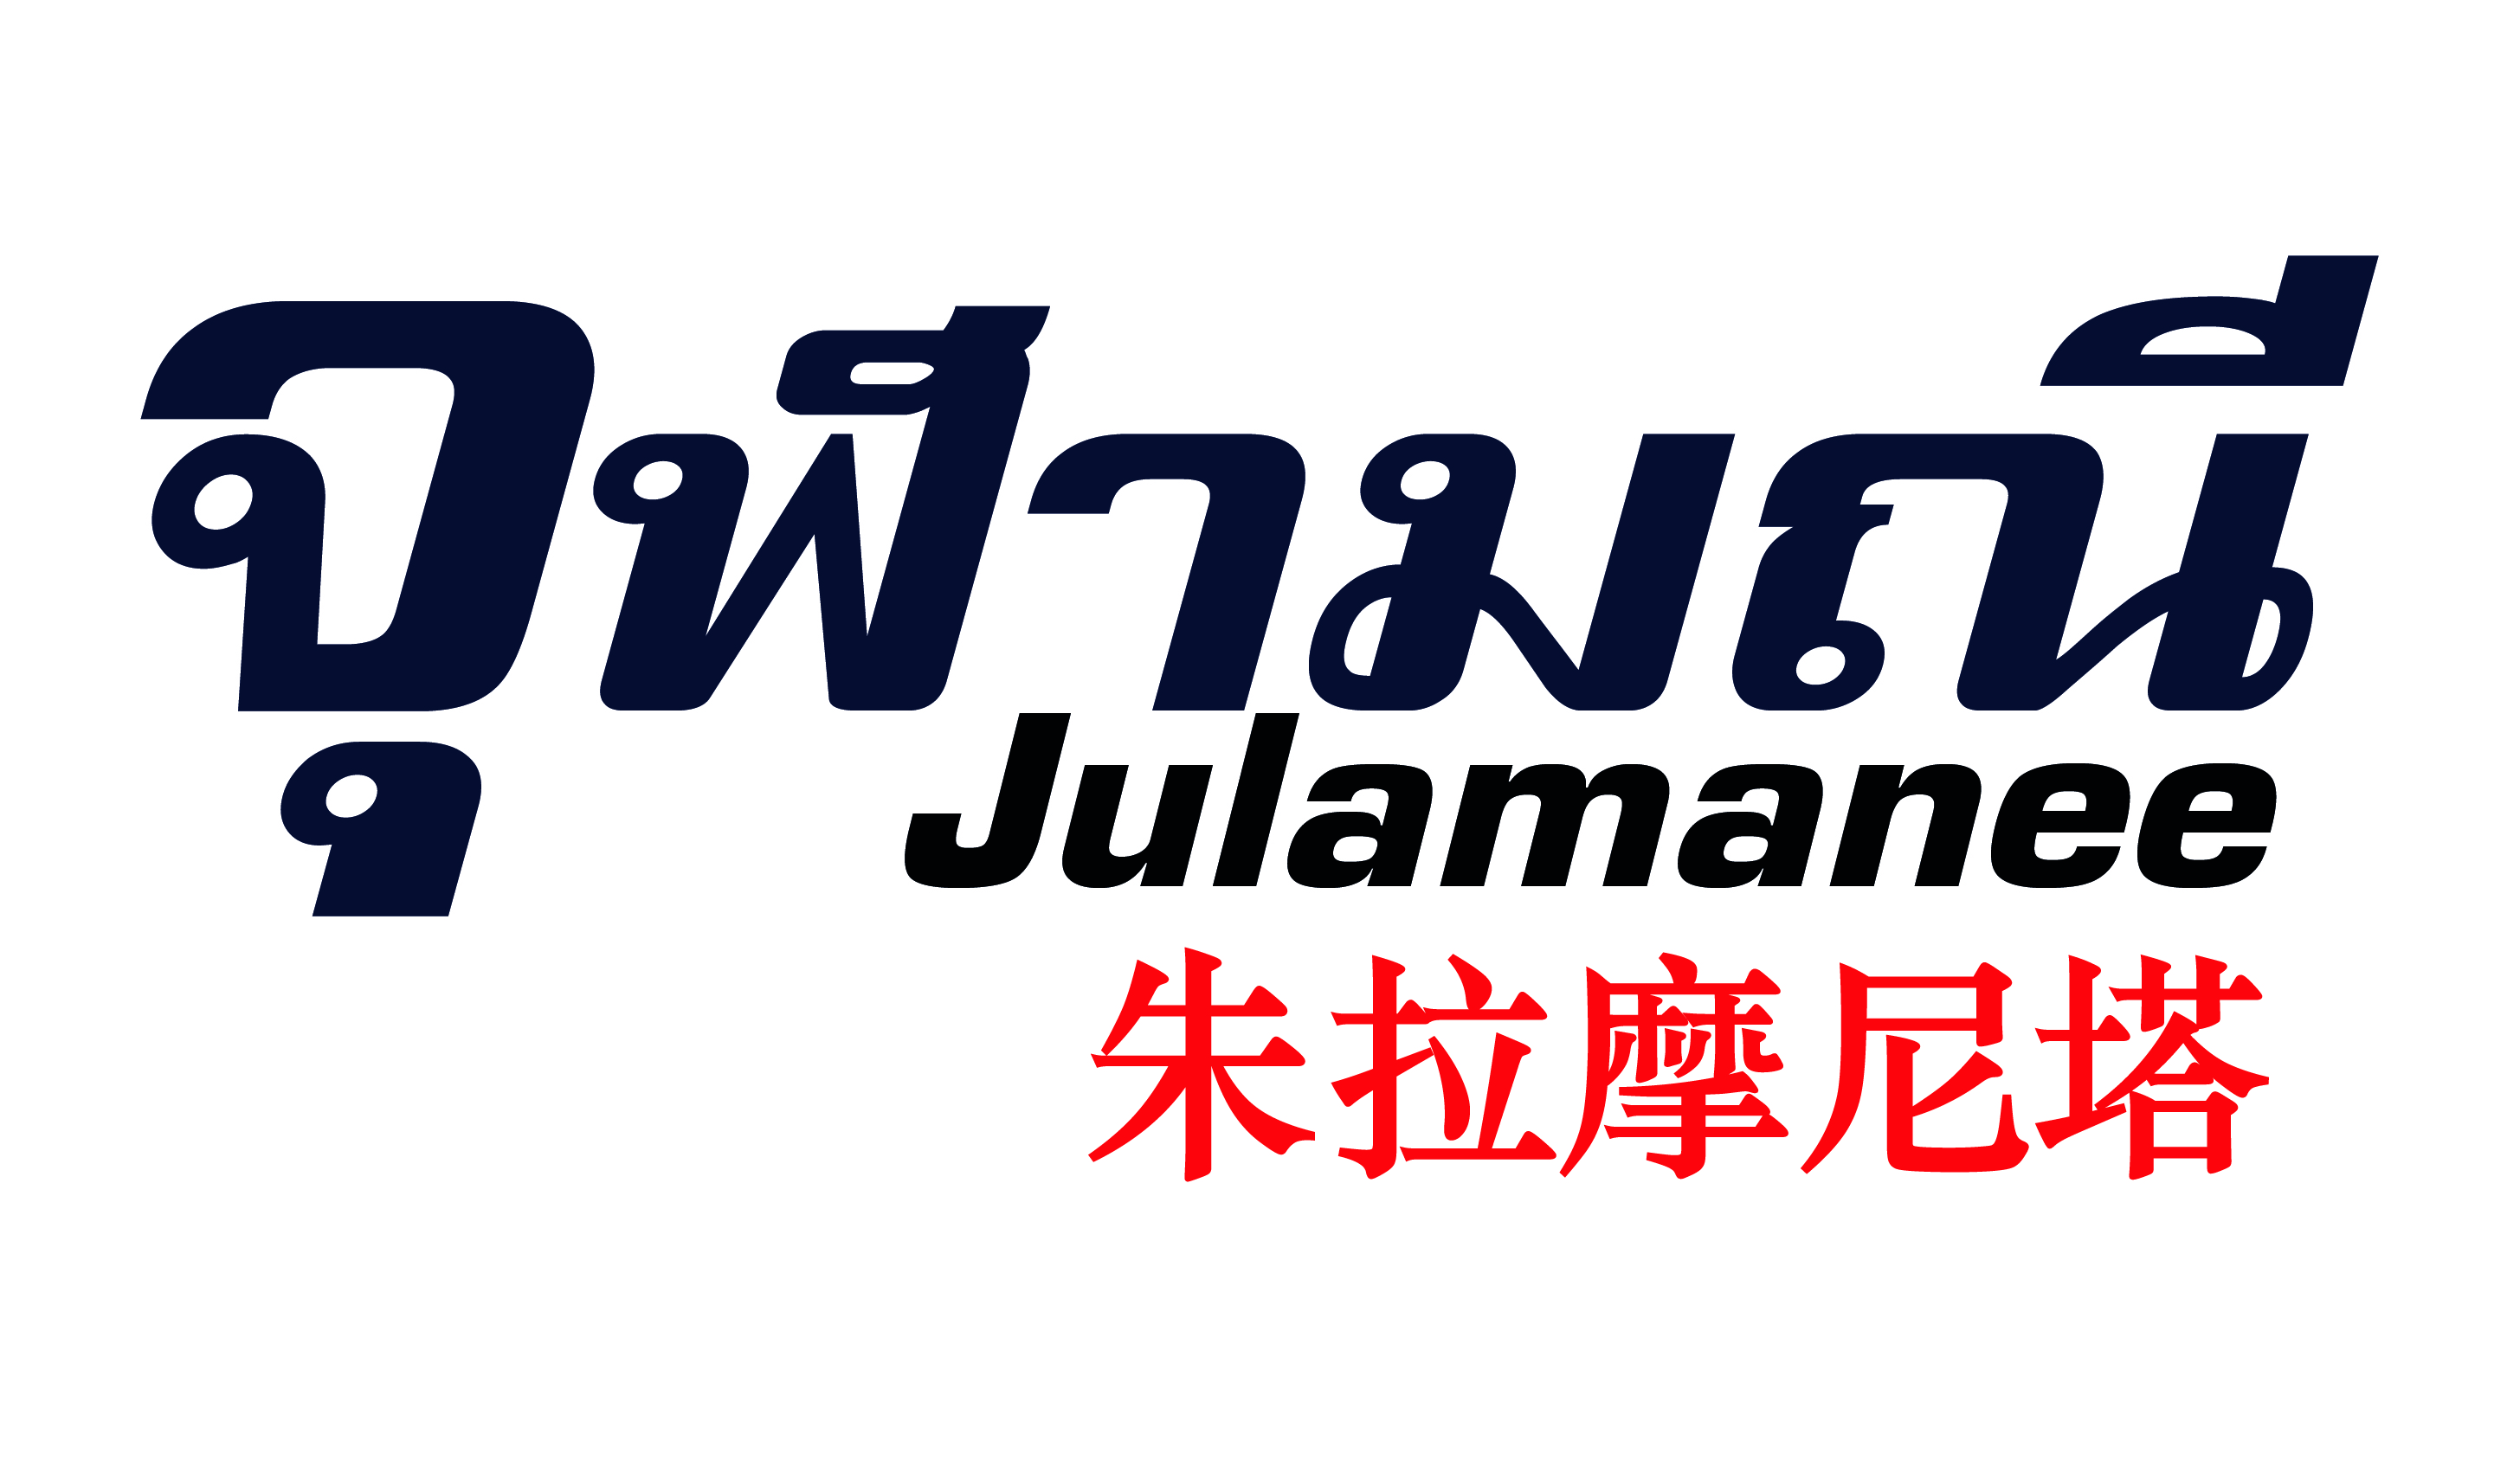 JULAMANEE PHARMACEUTICAL CO., LTD. (Head office)